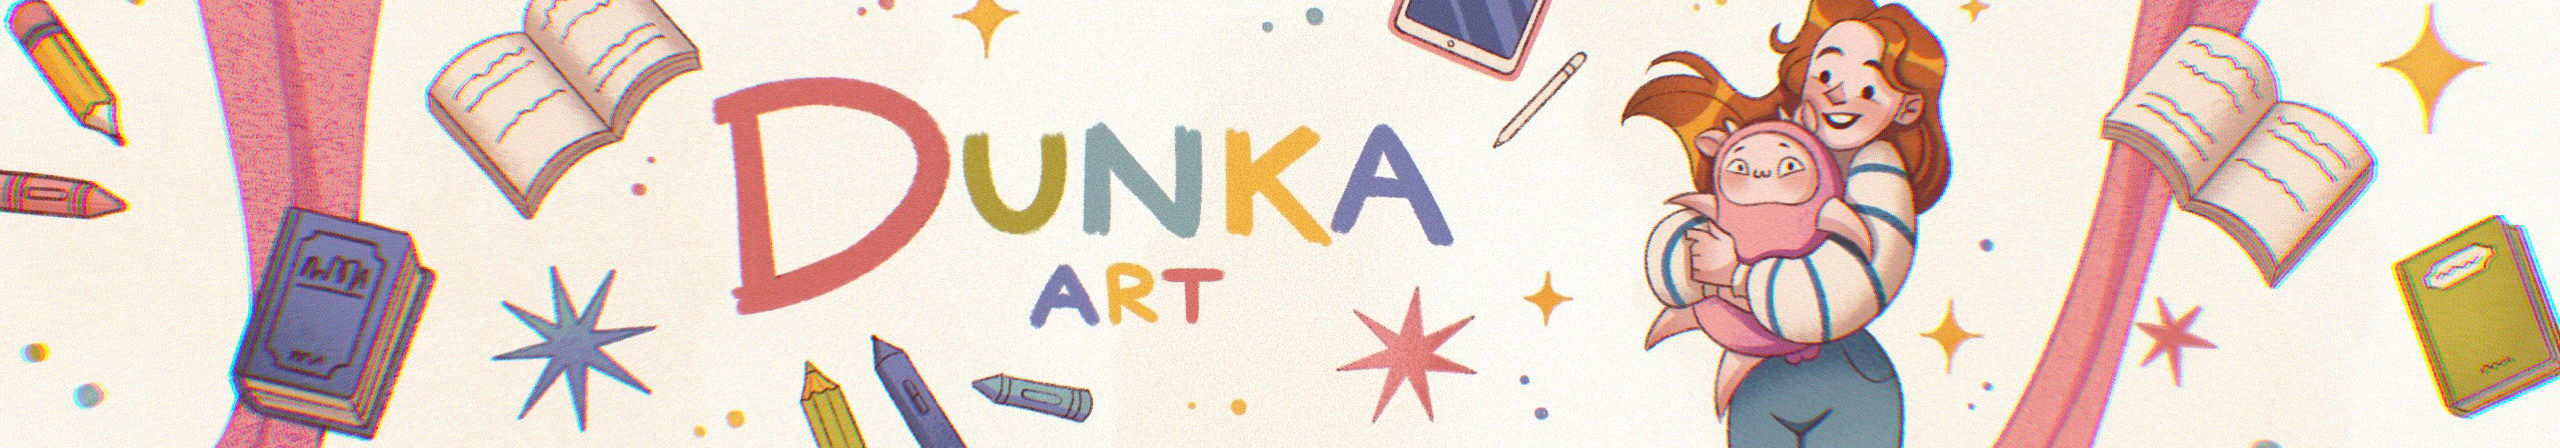 Dunka Arts profilbanner